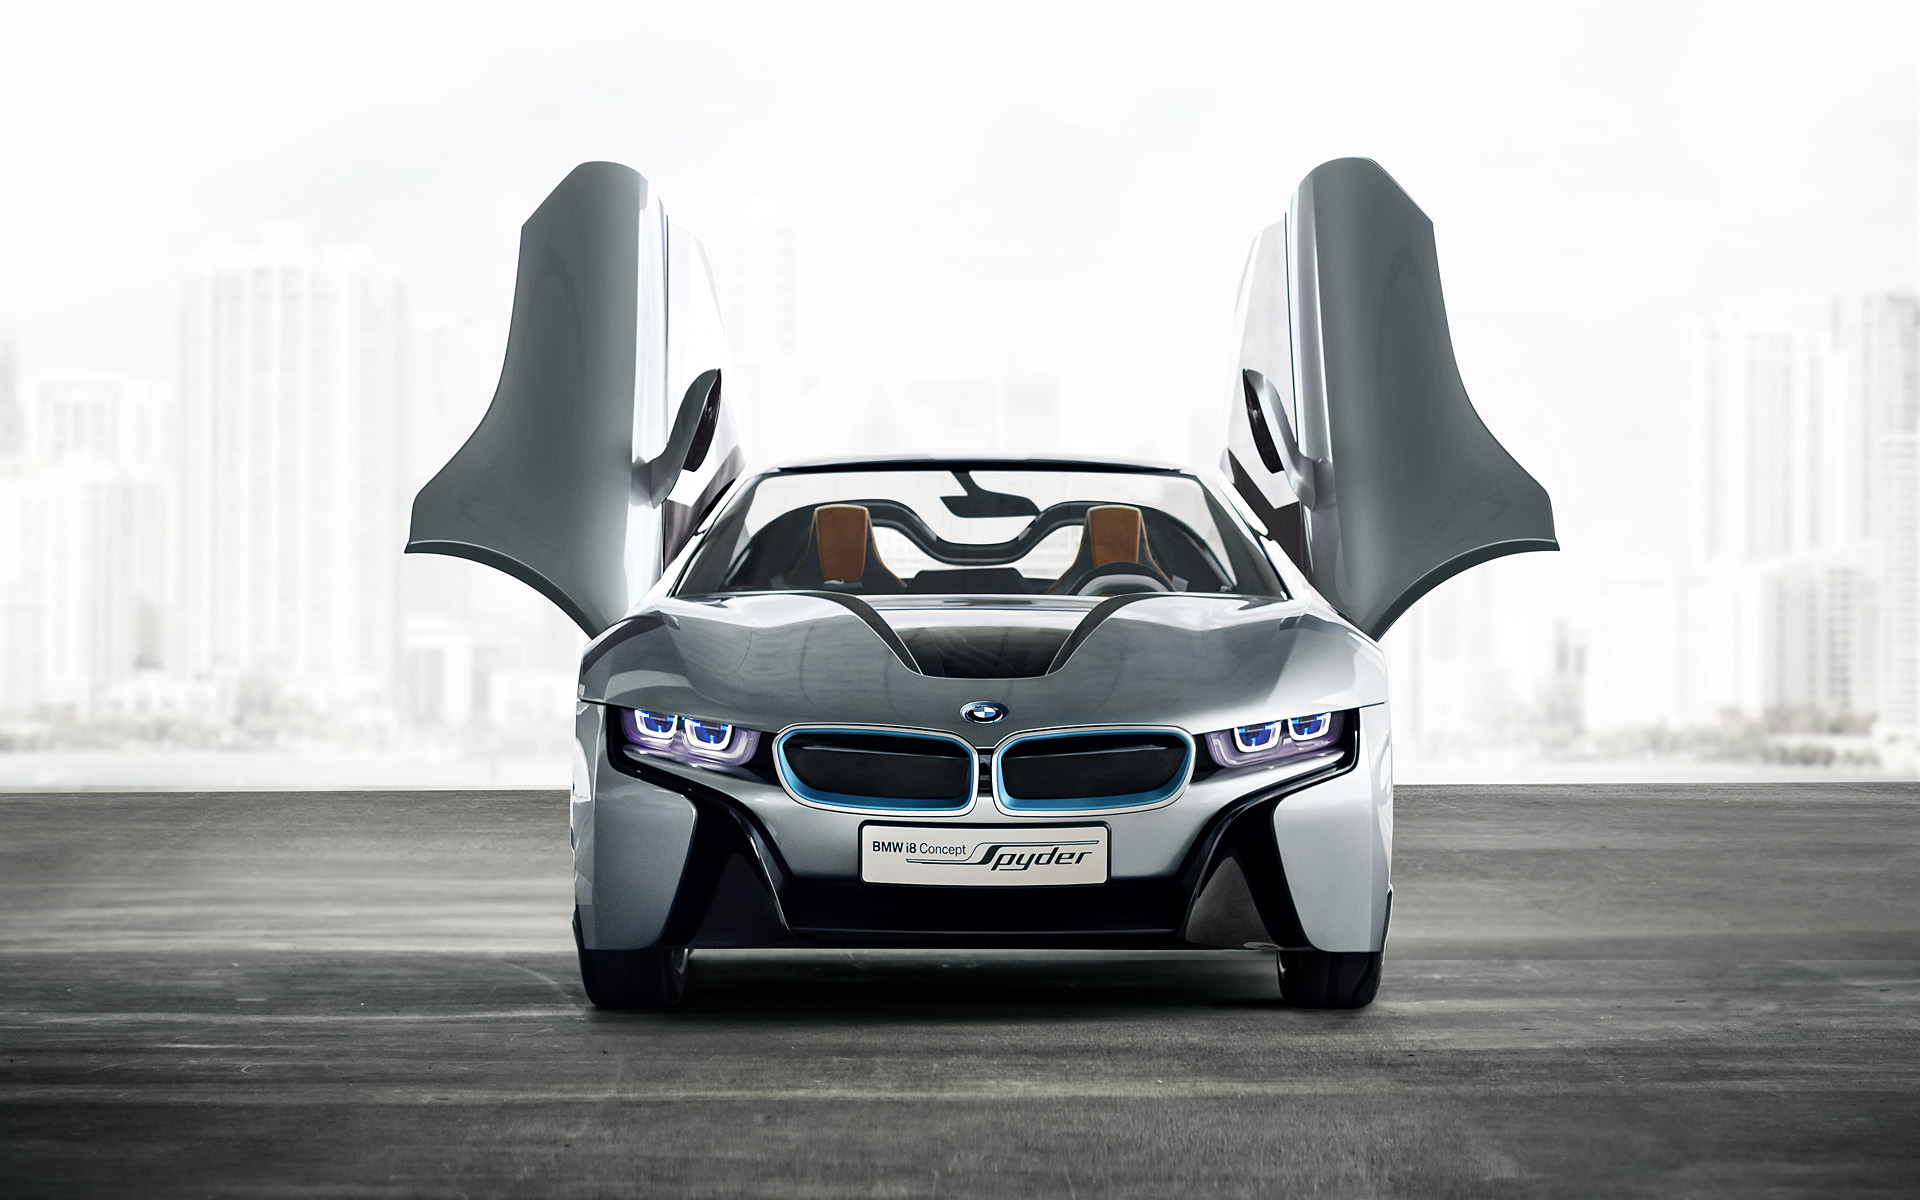  2013 BMW i8 Spyder Concept Wallpaper.